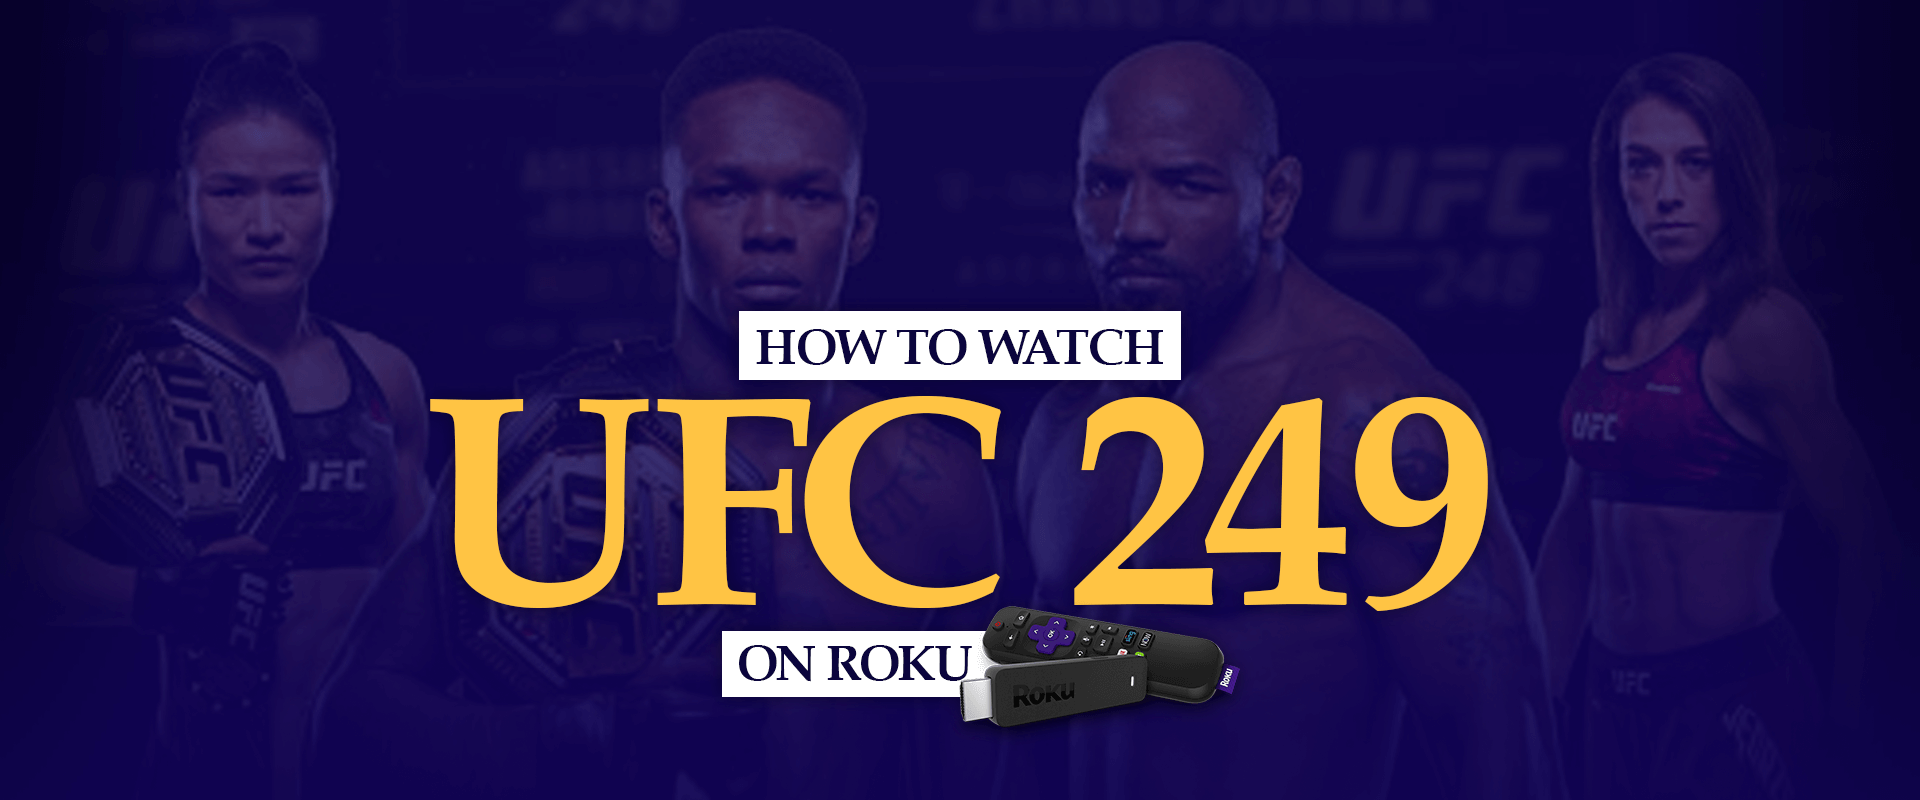 How to Watch UFC on Roku UFC 249 on Roku MMA Fight Online